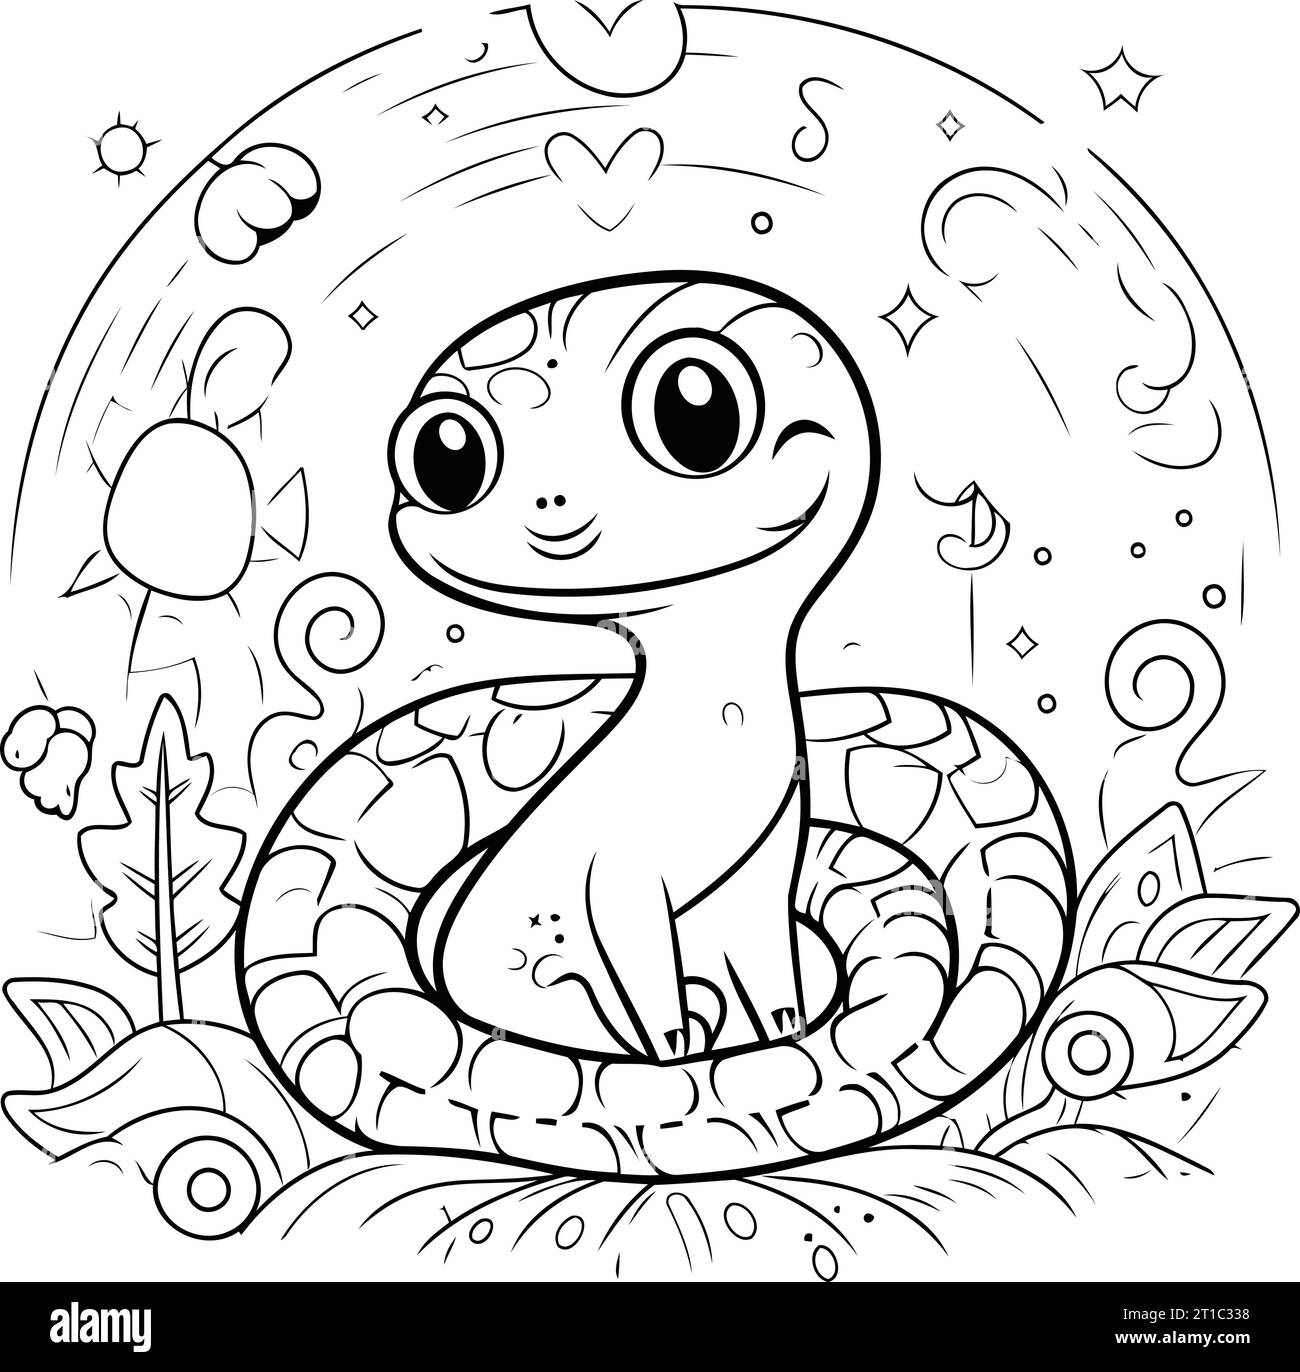 Coloring book for children. Cute cartoon snake. Vector illustration. Stock Vector